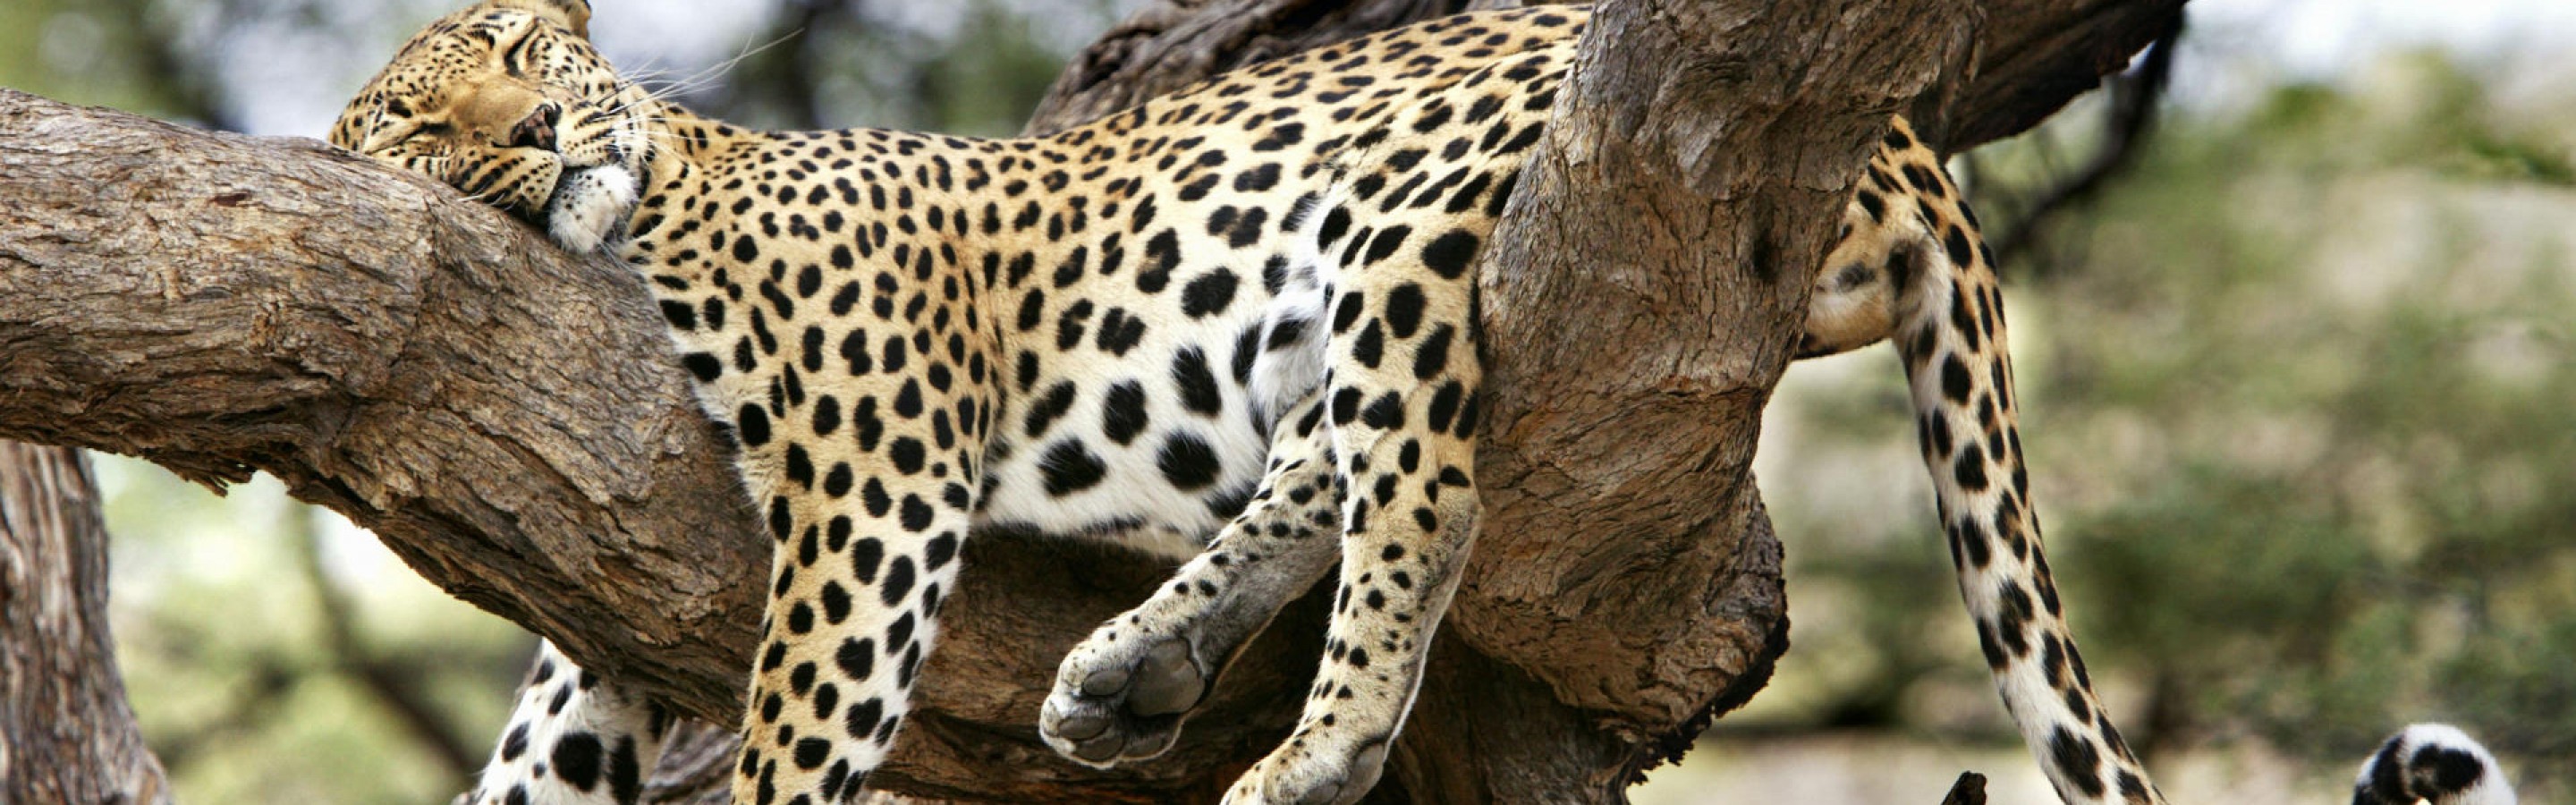 sleeping-leopard-animals-cats-cute-leopard-nature-sleeping-trees-900x2880